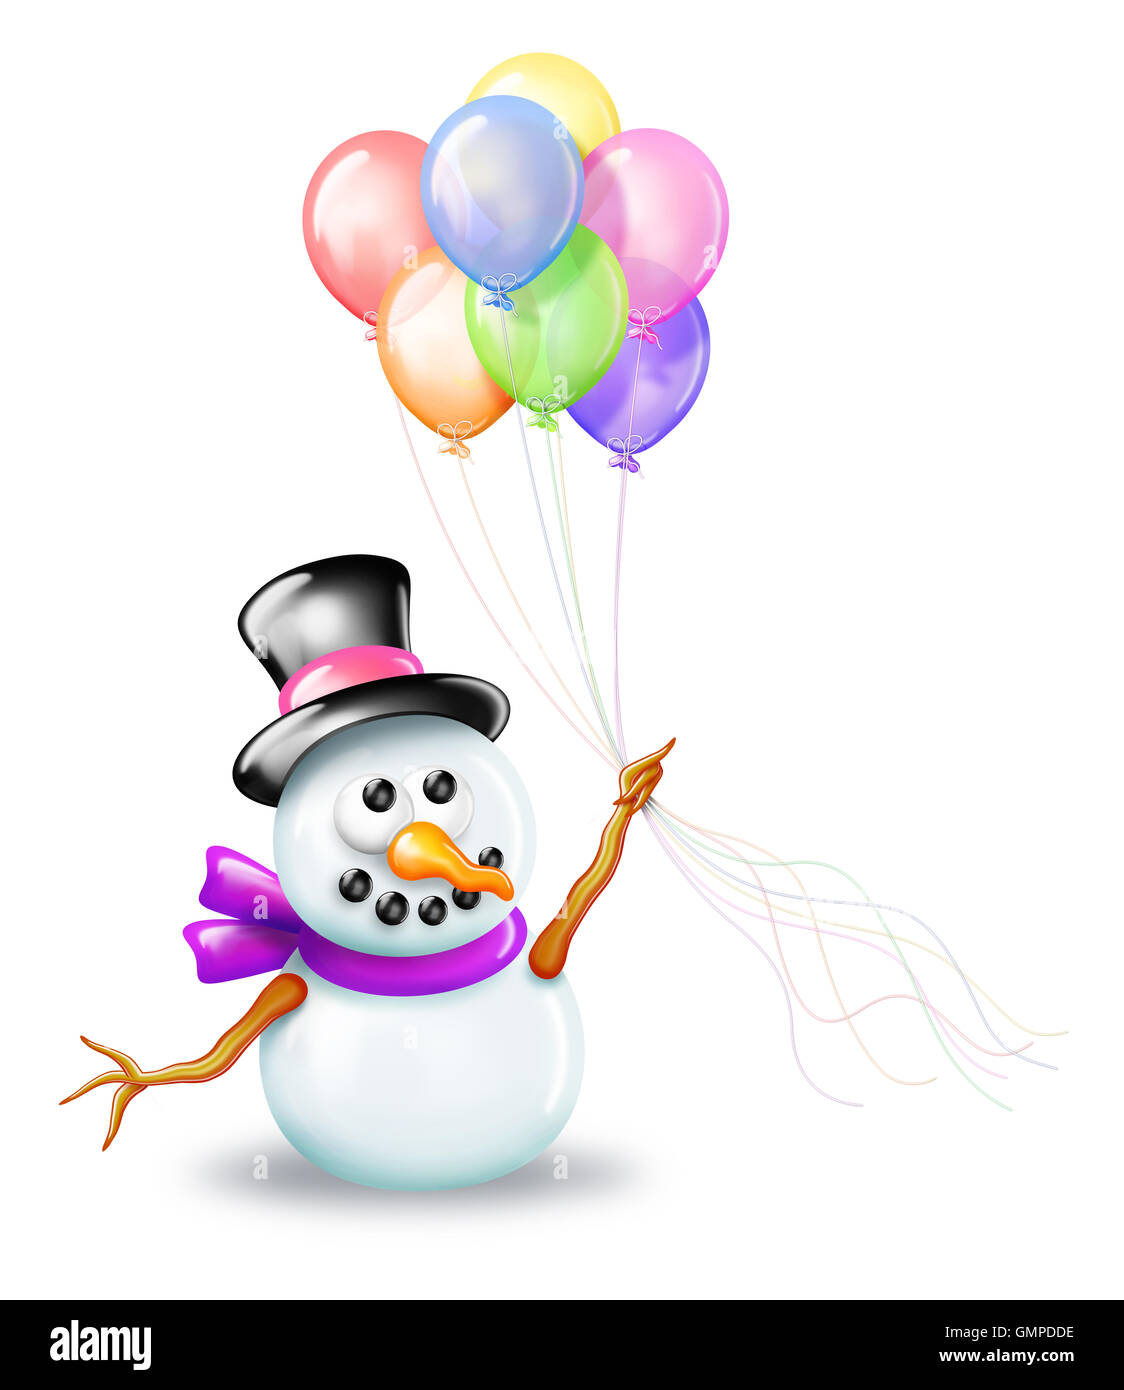 snowman birthday clipart